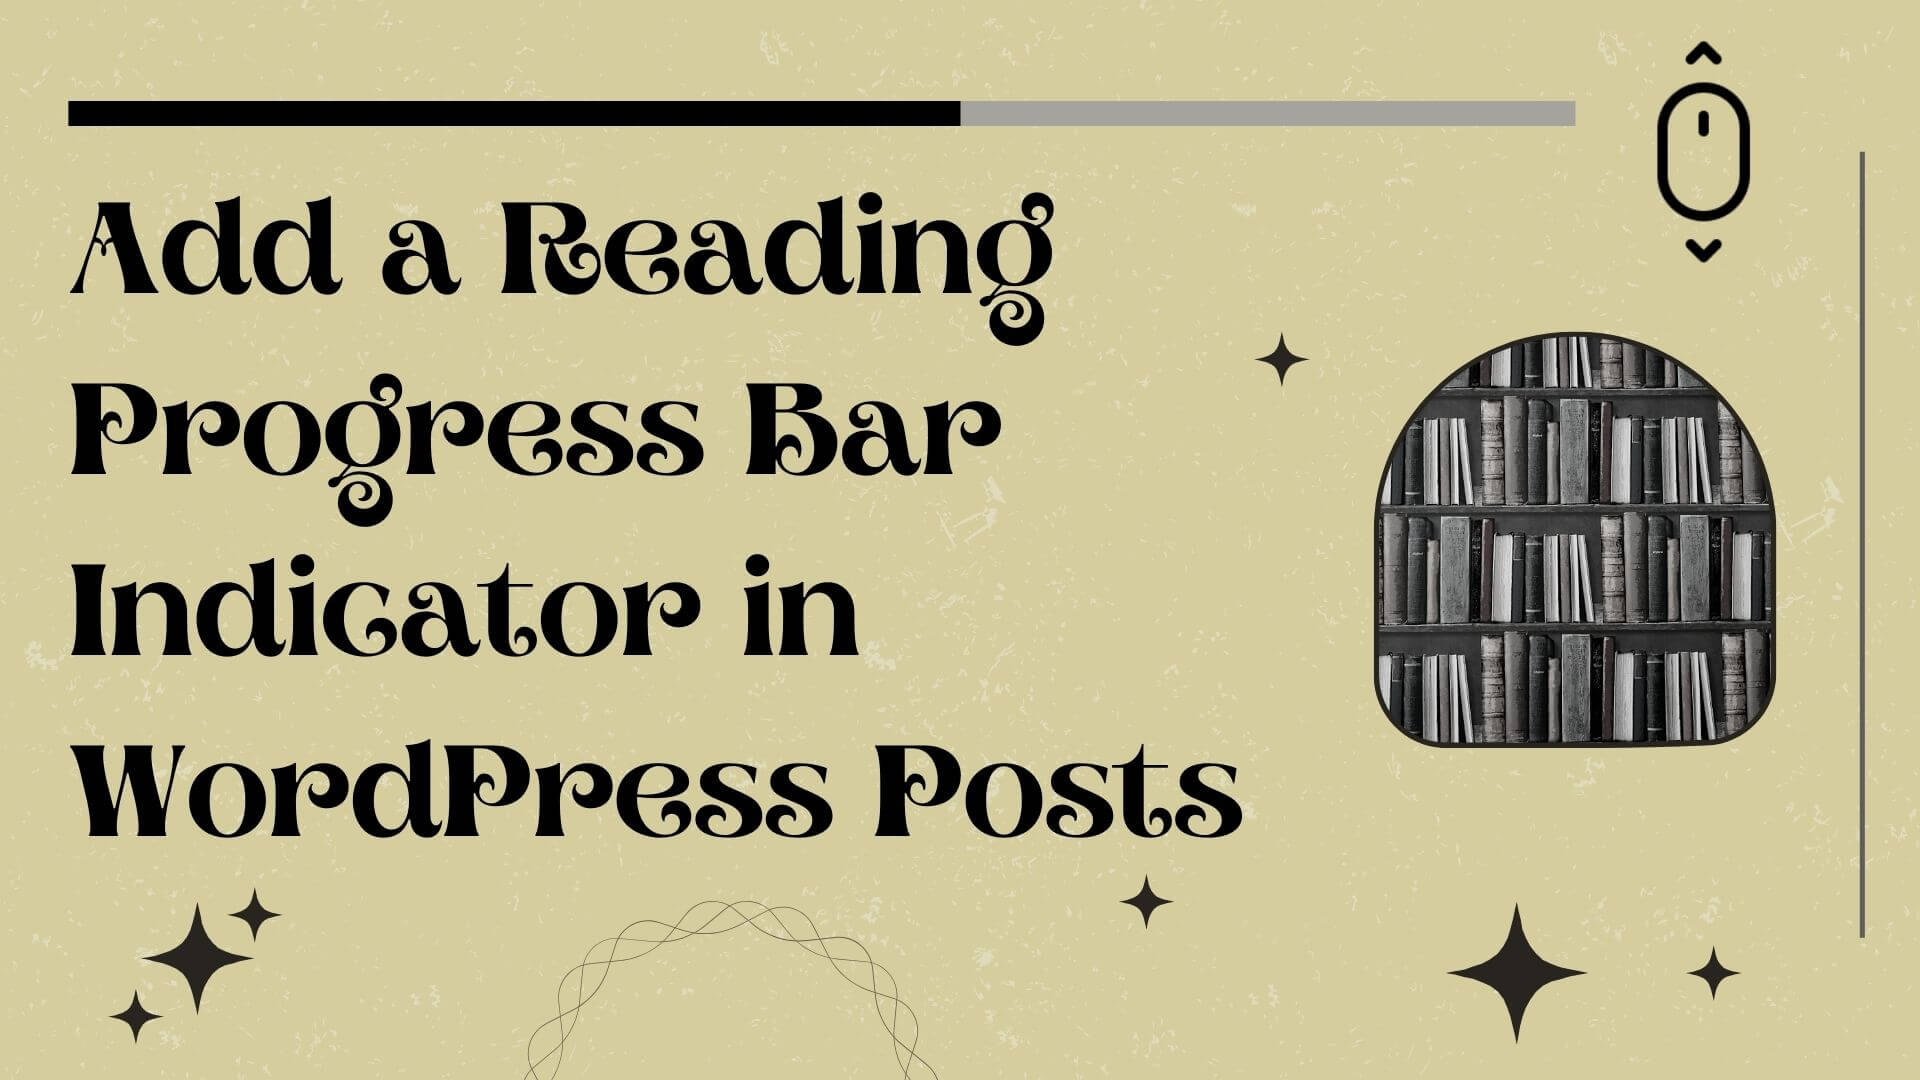 Add a Reading Progress Bar indicator in WordPress Posts